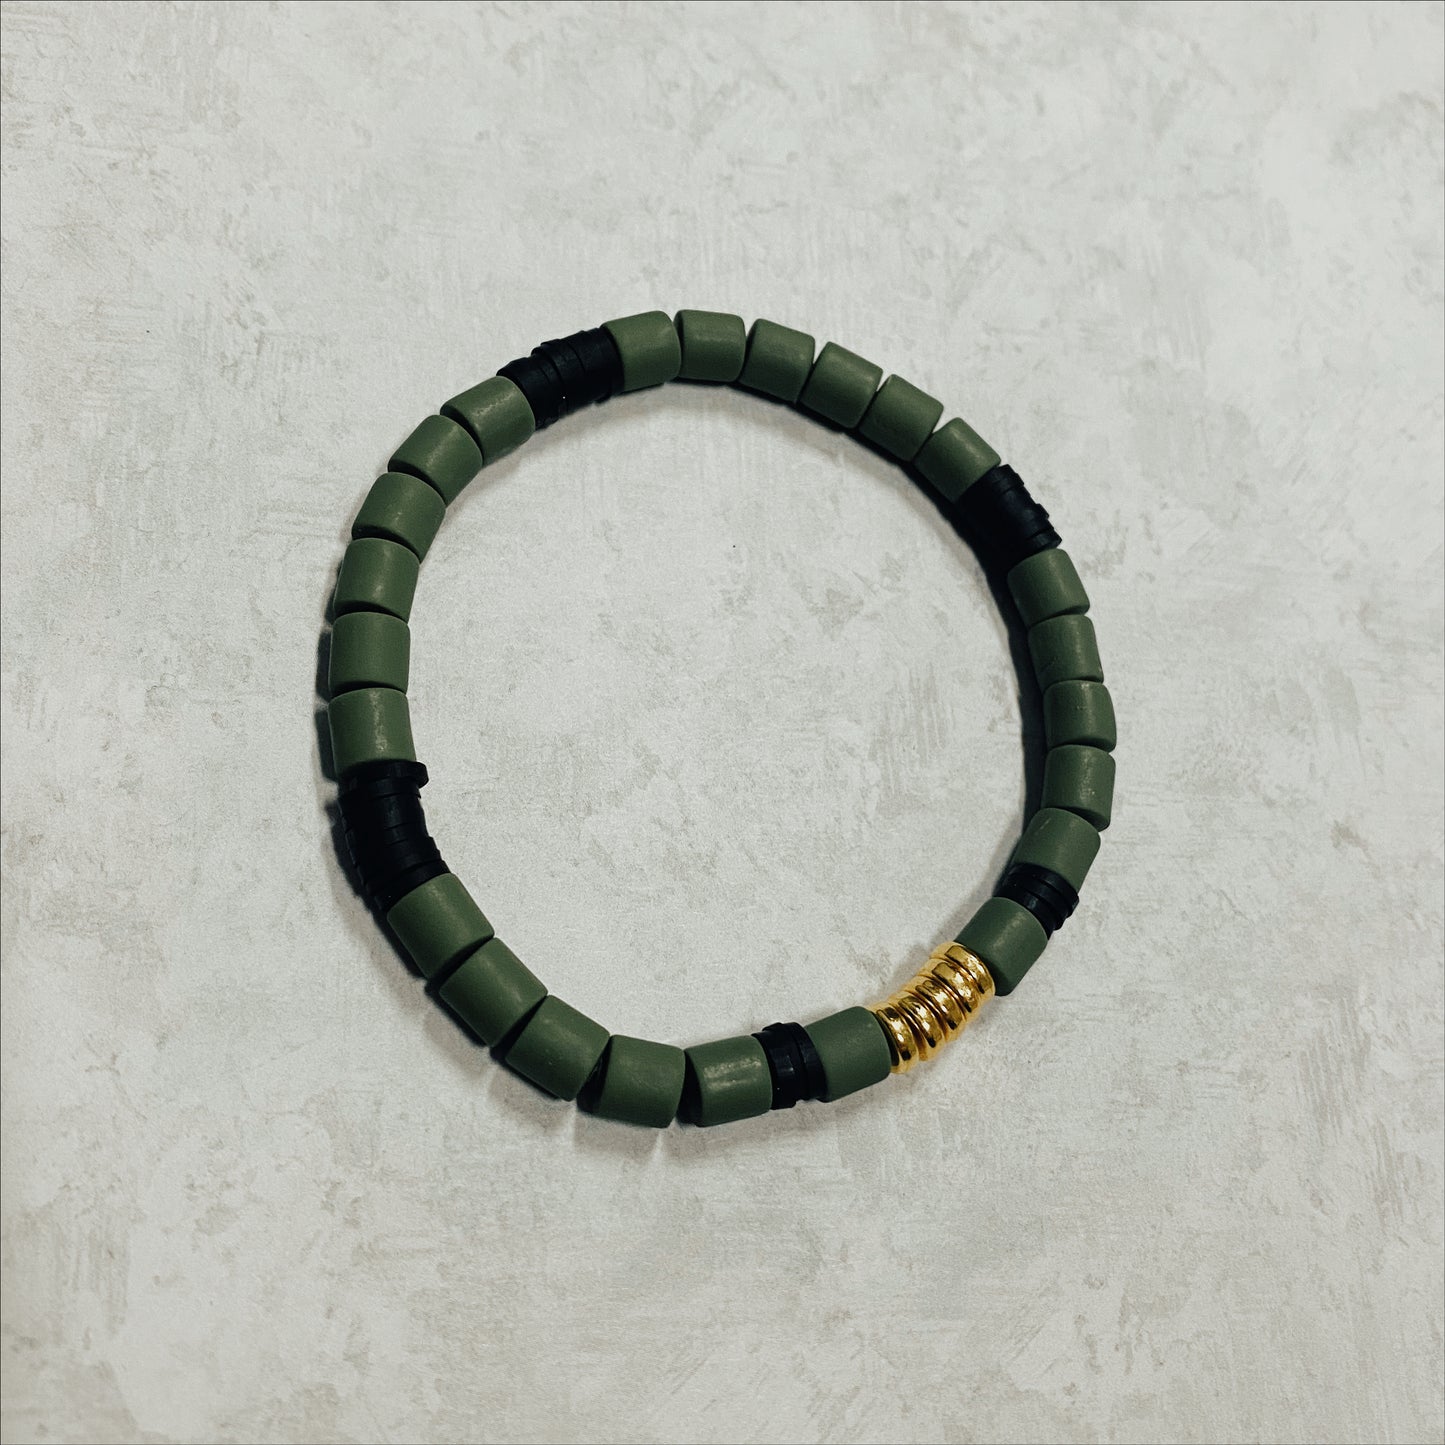 Loki inspired Stretch bracelet